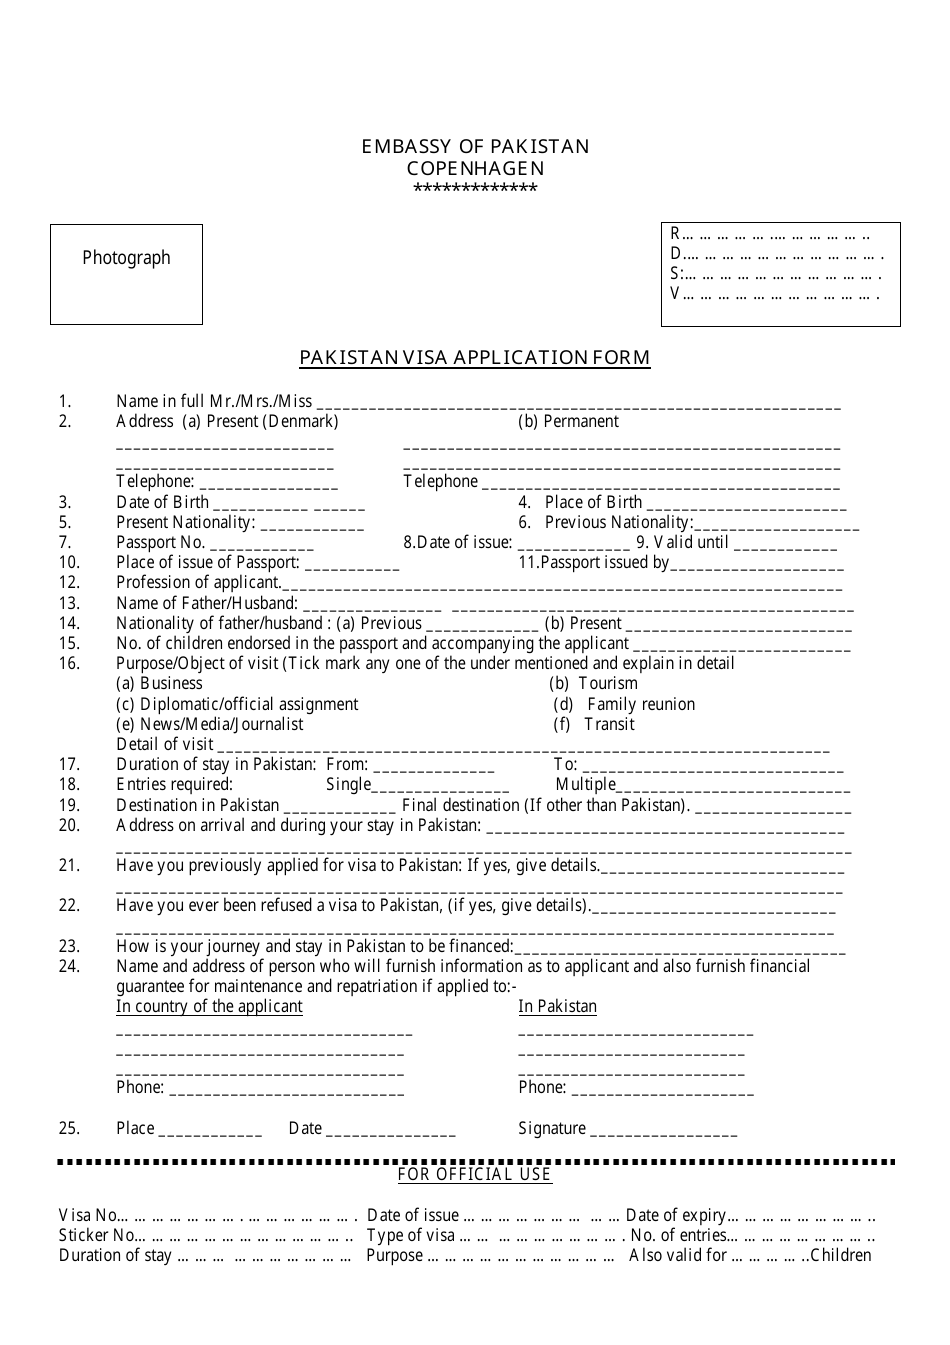 Pakistani Visa Application Form - Embassy of Pakistan - Copenhagen, Denmark, Page 1